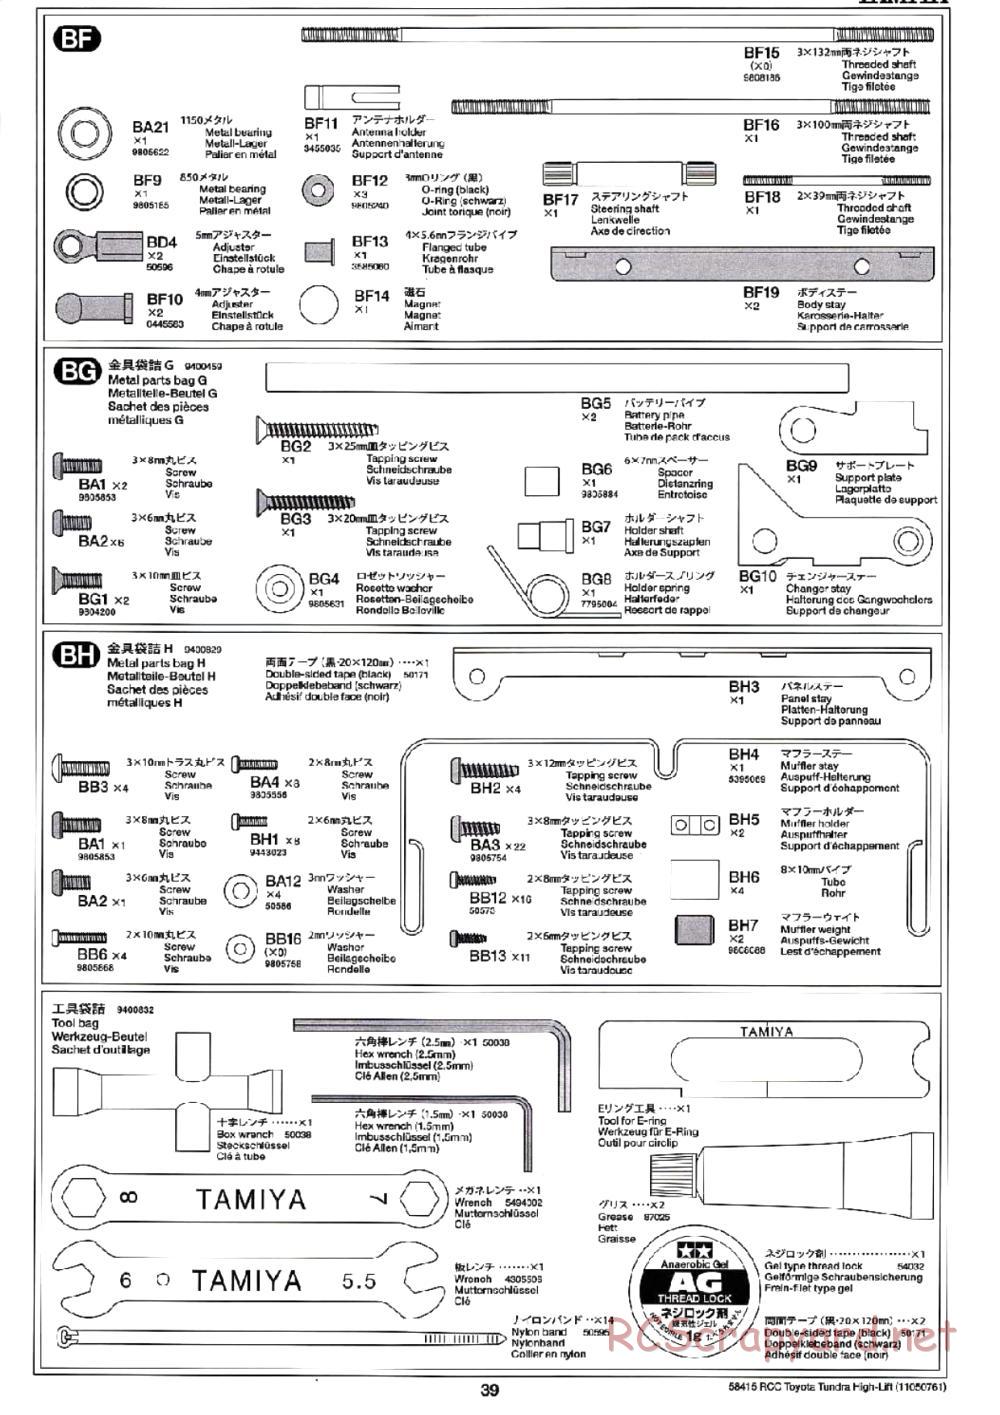 Tamiya - Toyota Tundra High-Lift Chassis - Manual - Page 39